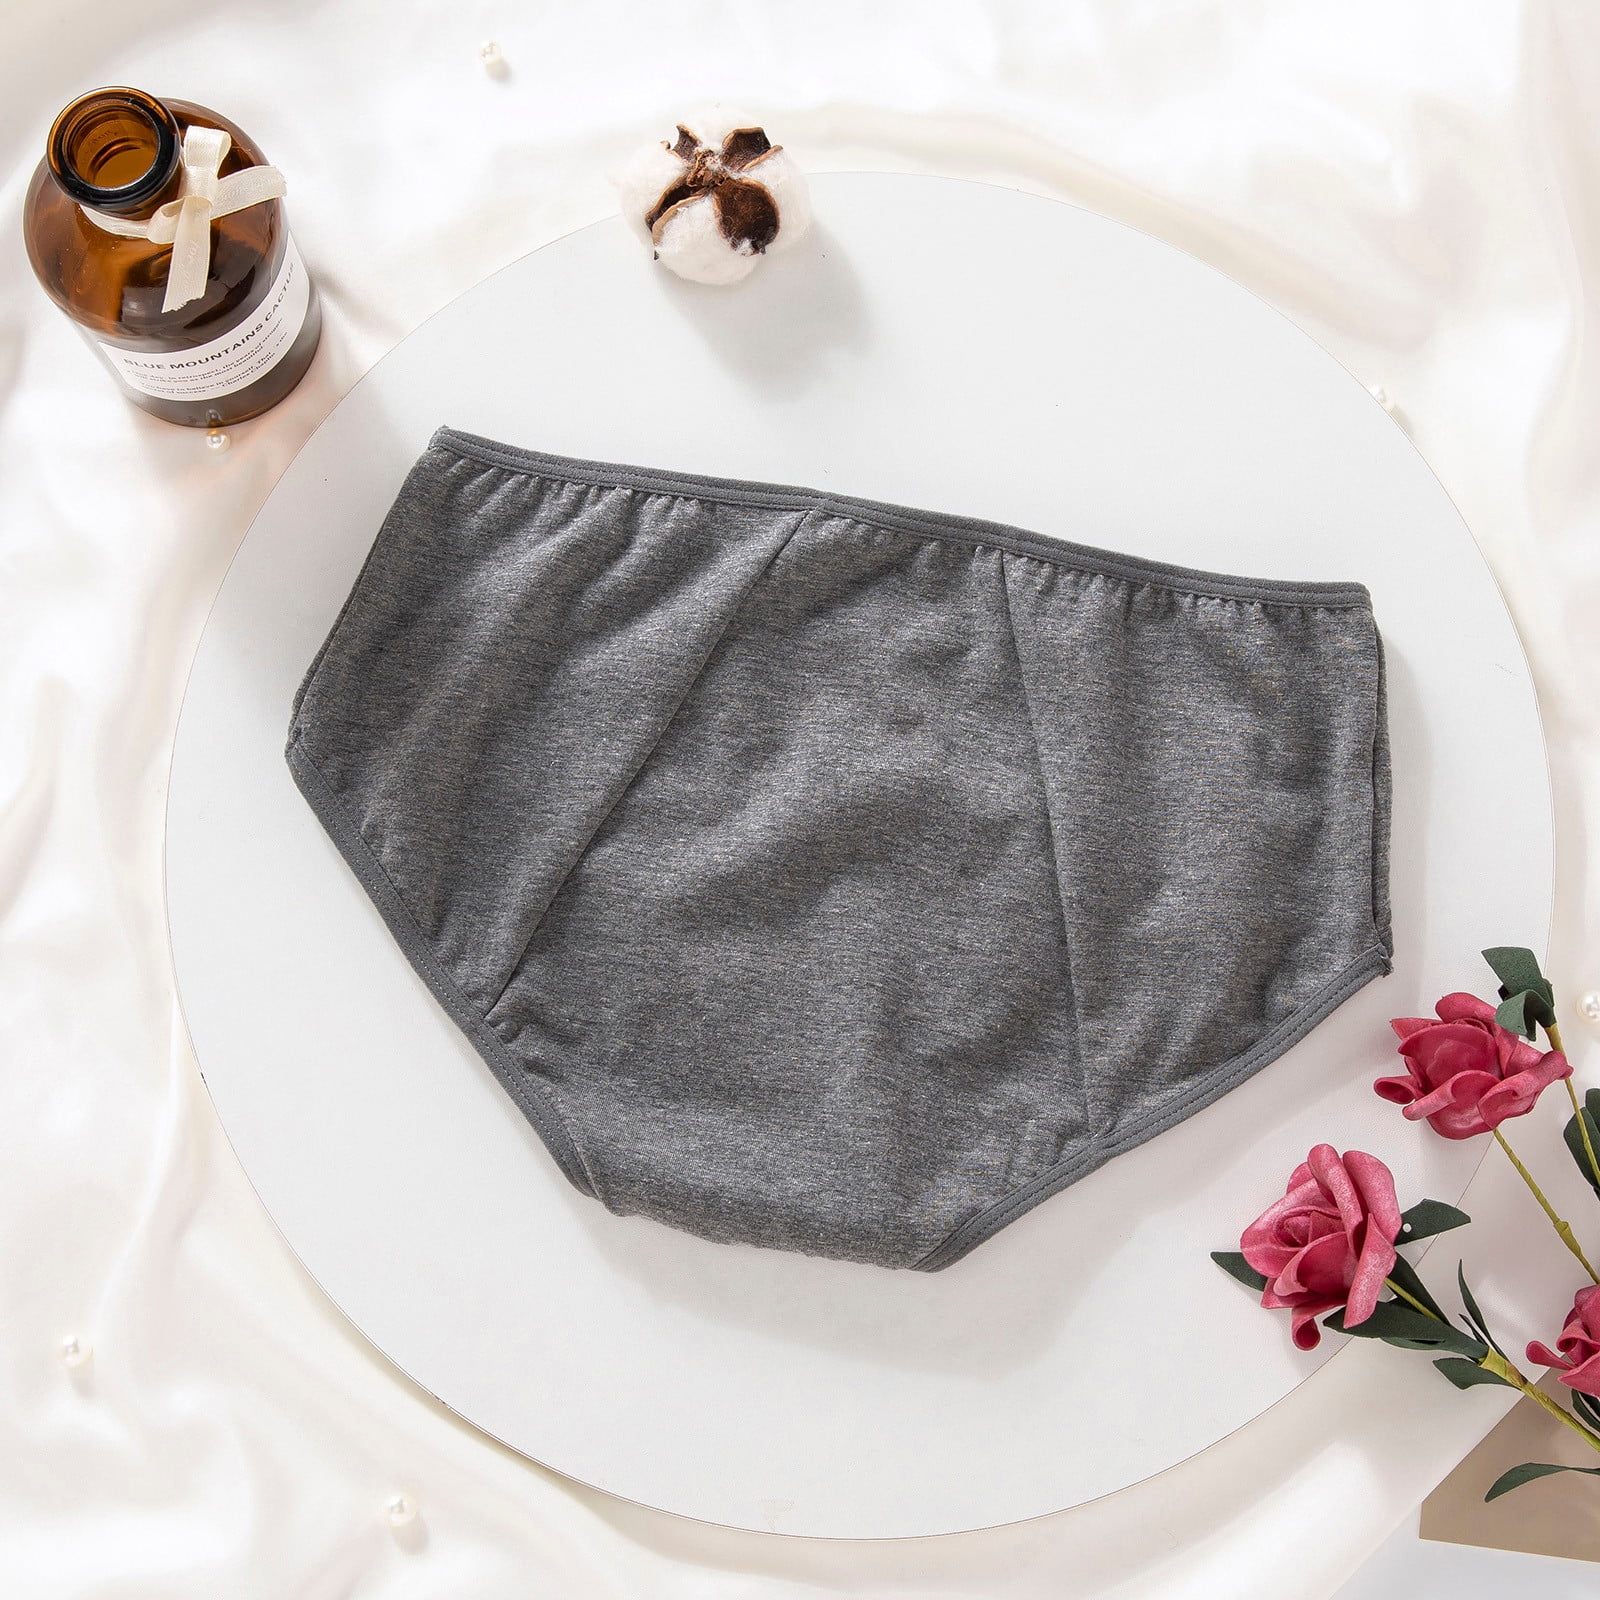 Pimfylm G String Thongs For Women Slutty Women's Cool Comfort Breathable  Mesh Brief Underwear Black Large